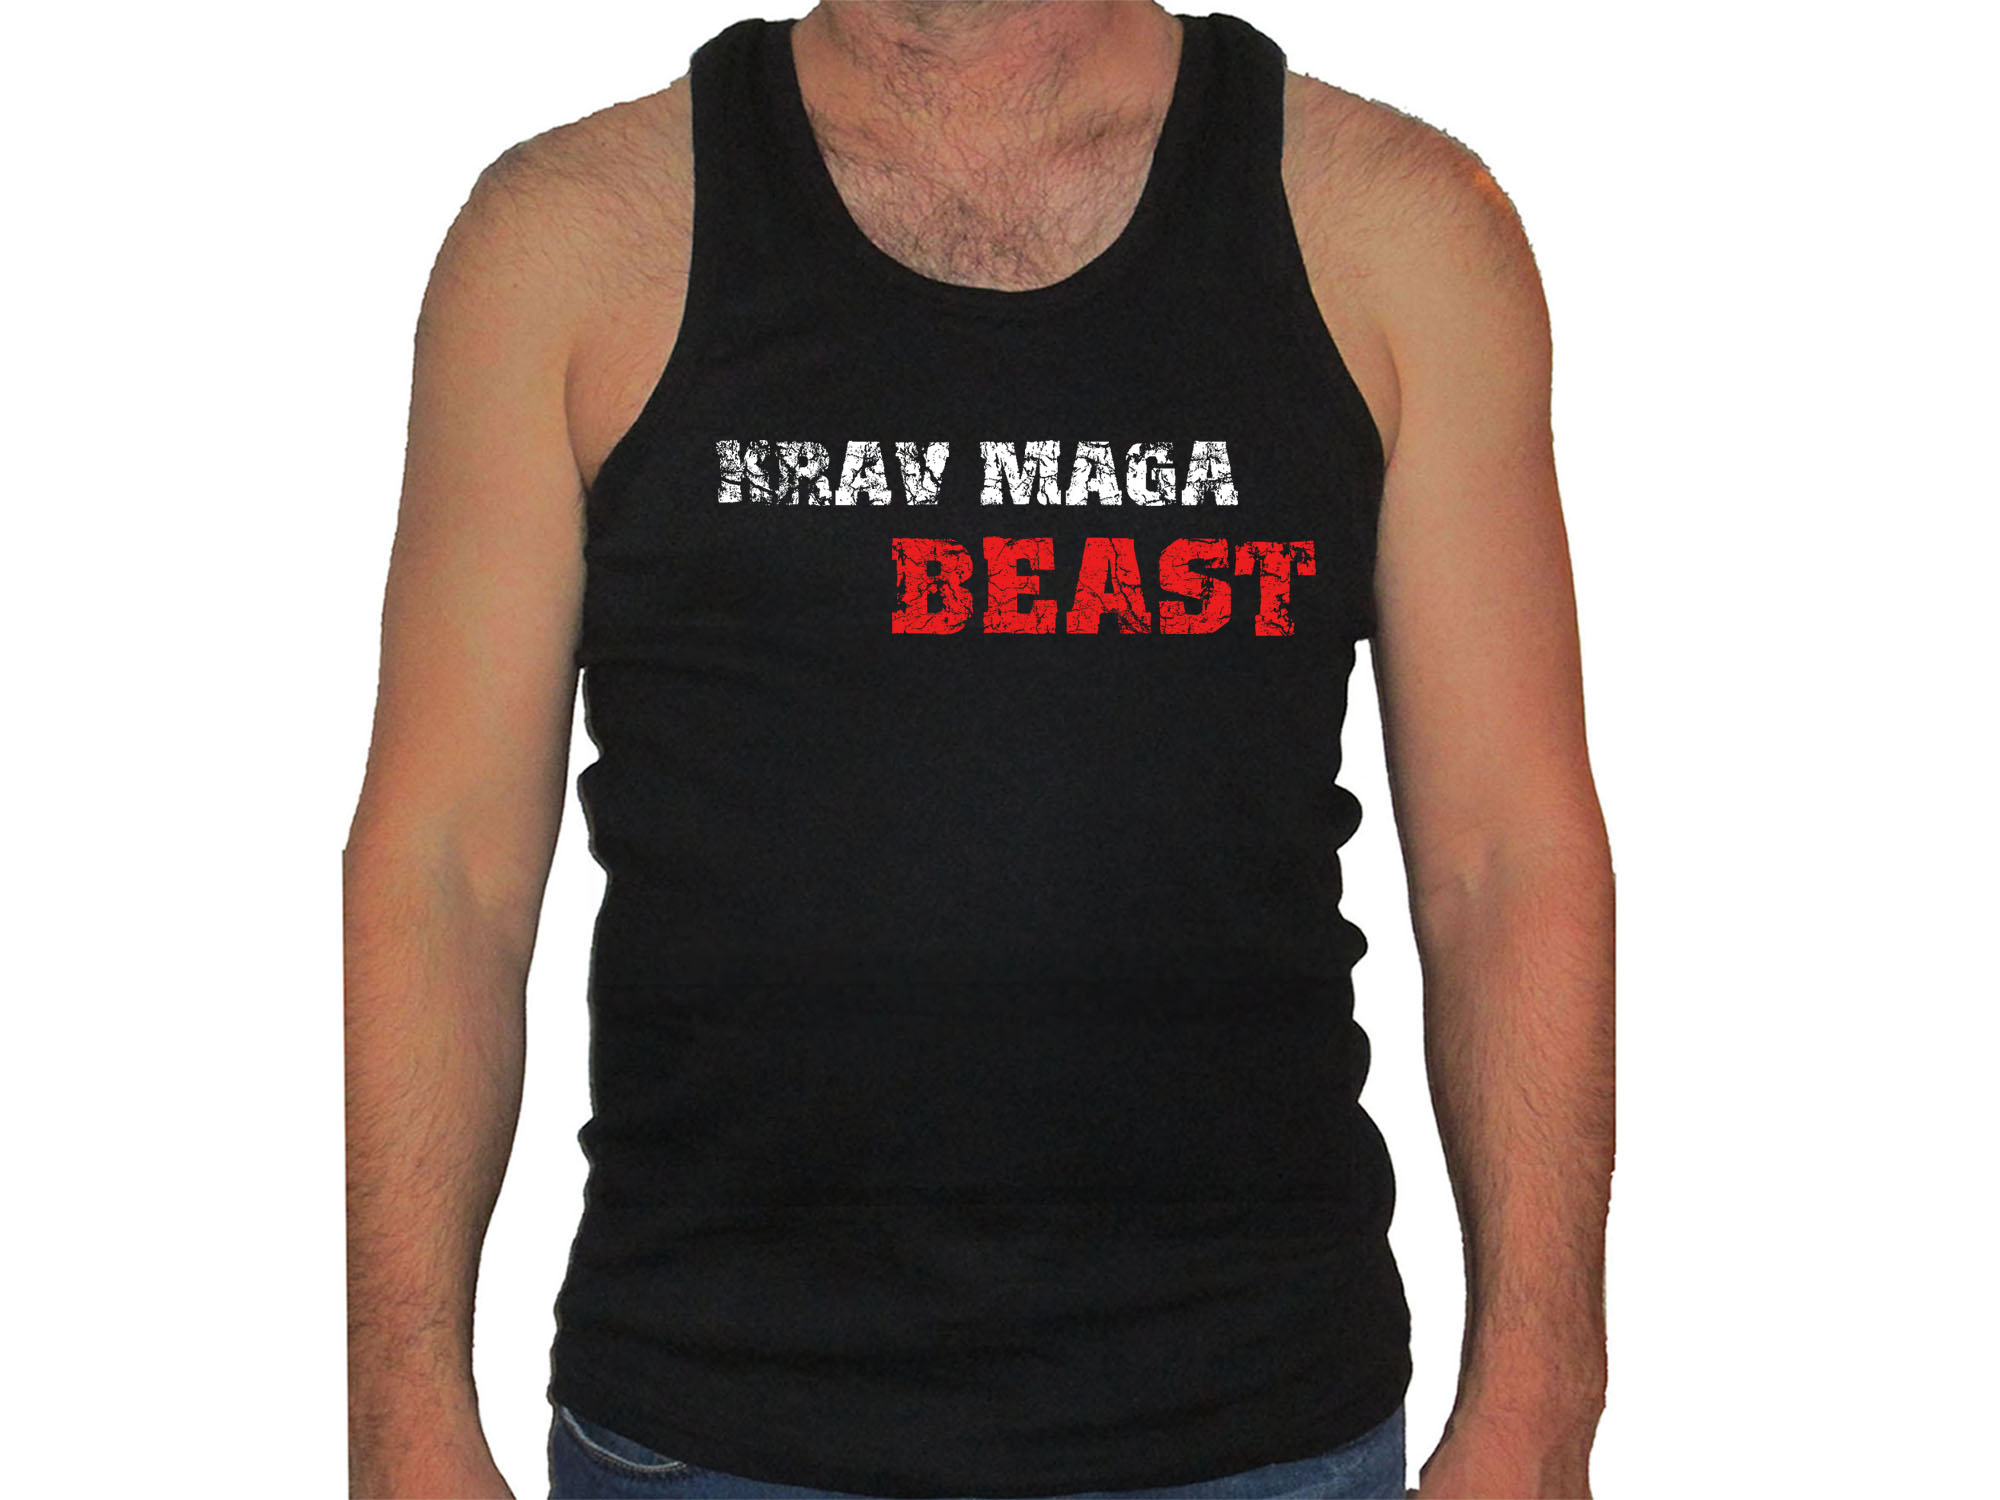 Krav Maga Beast destressed print Martial arts muscle tank top 2